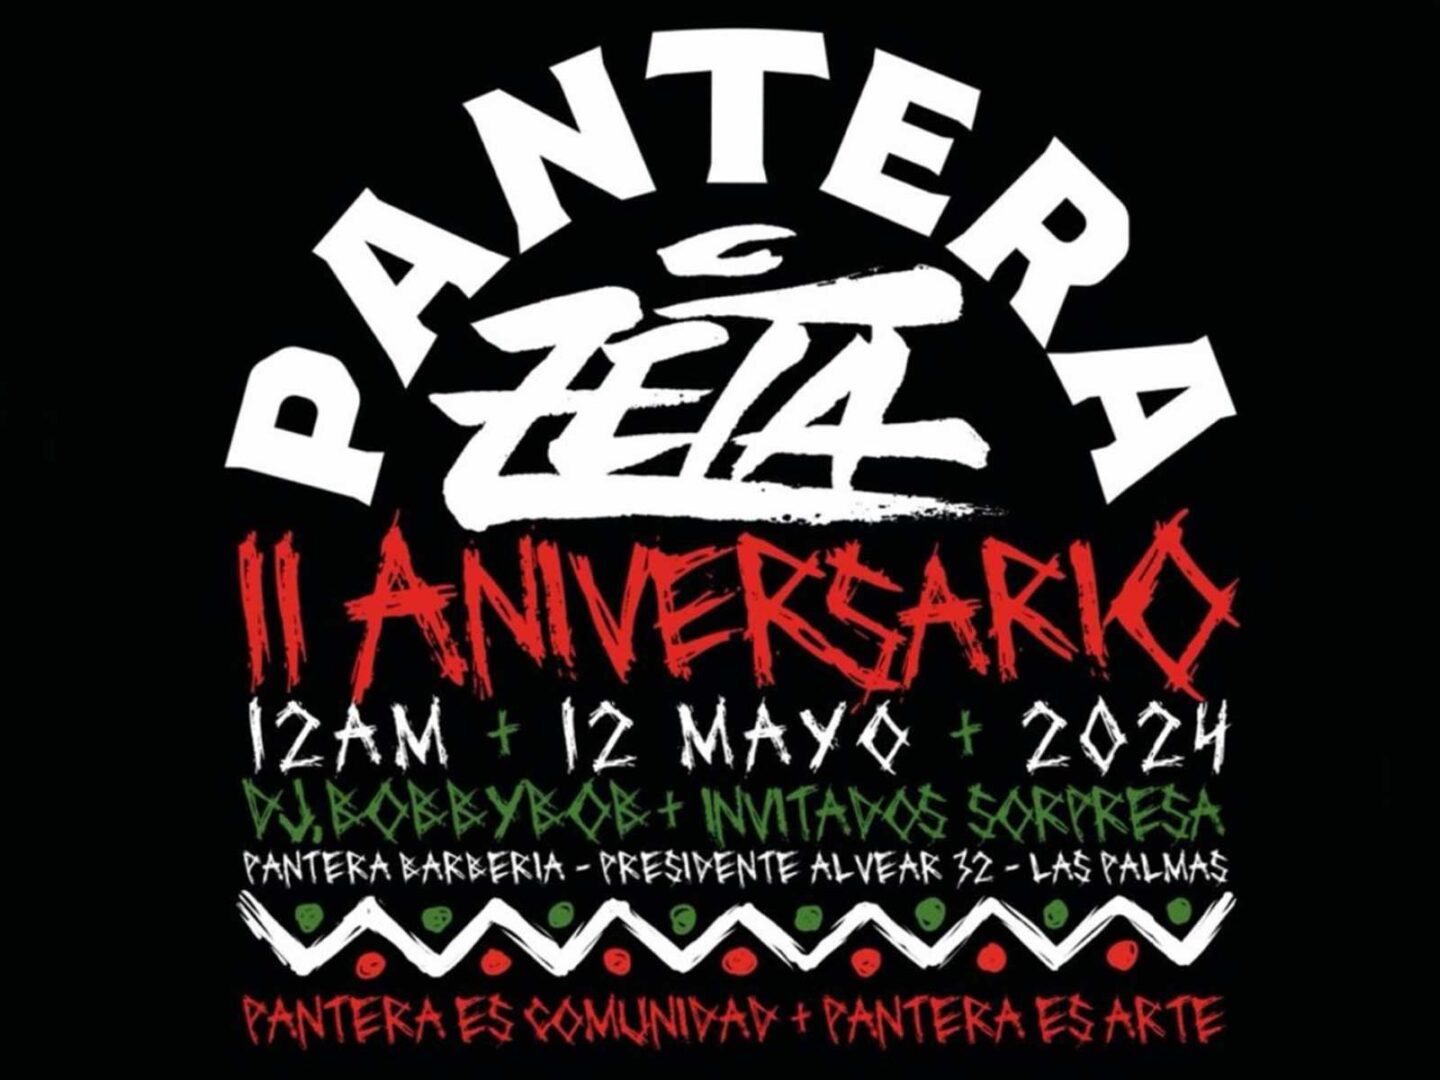  Pantera II Anniversary x Zeta 